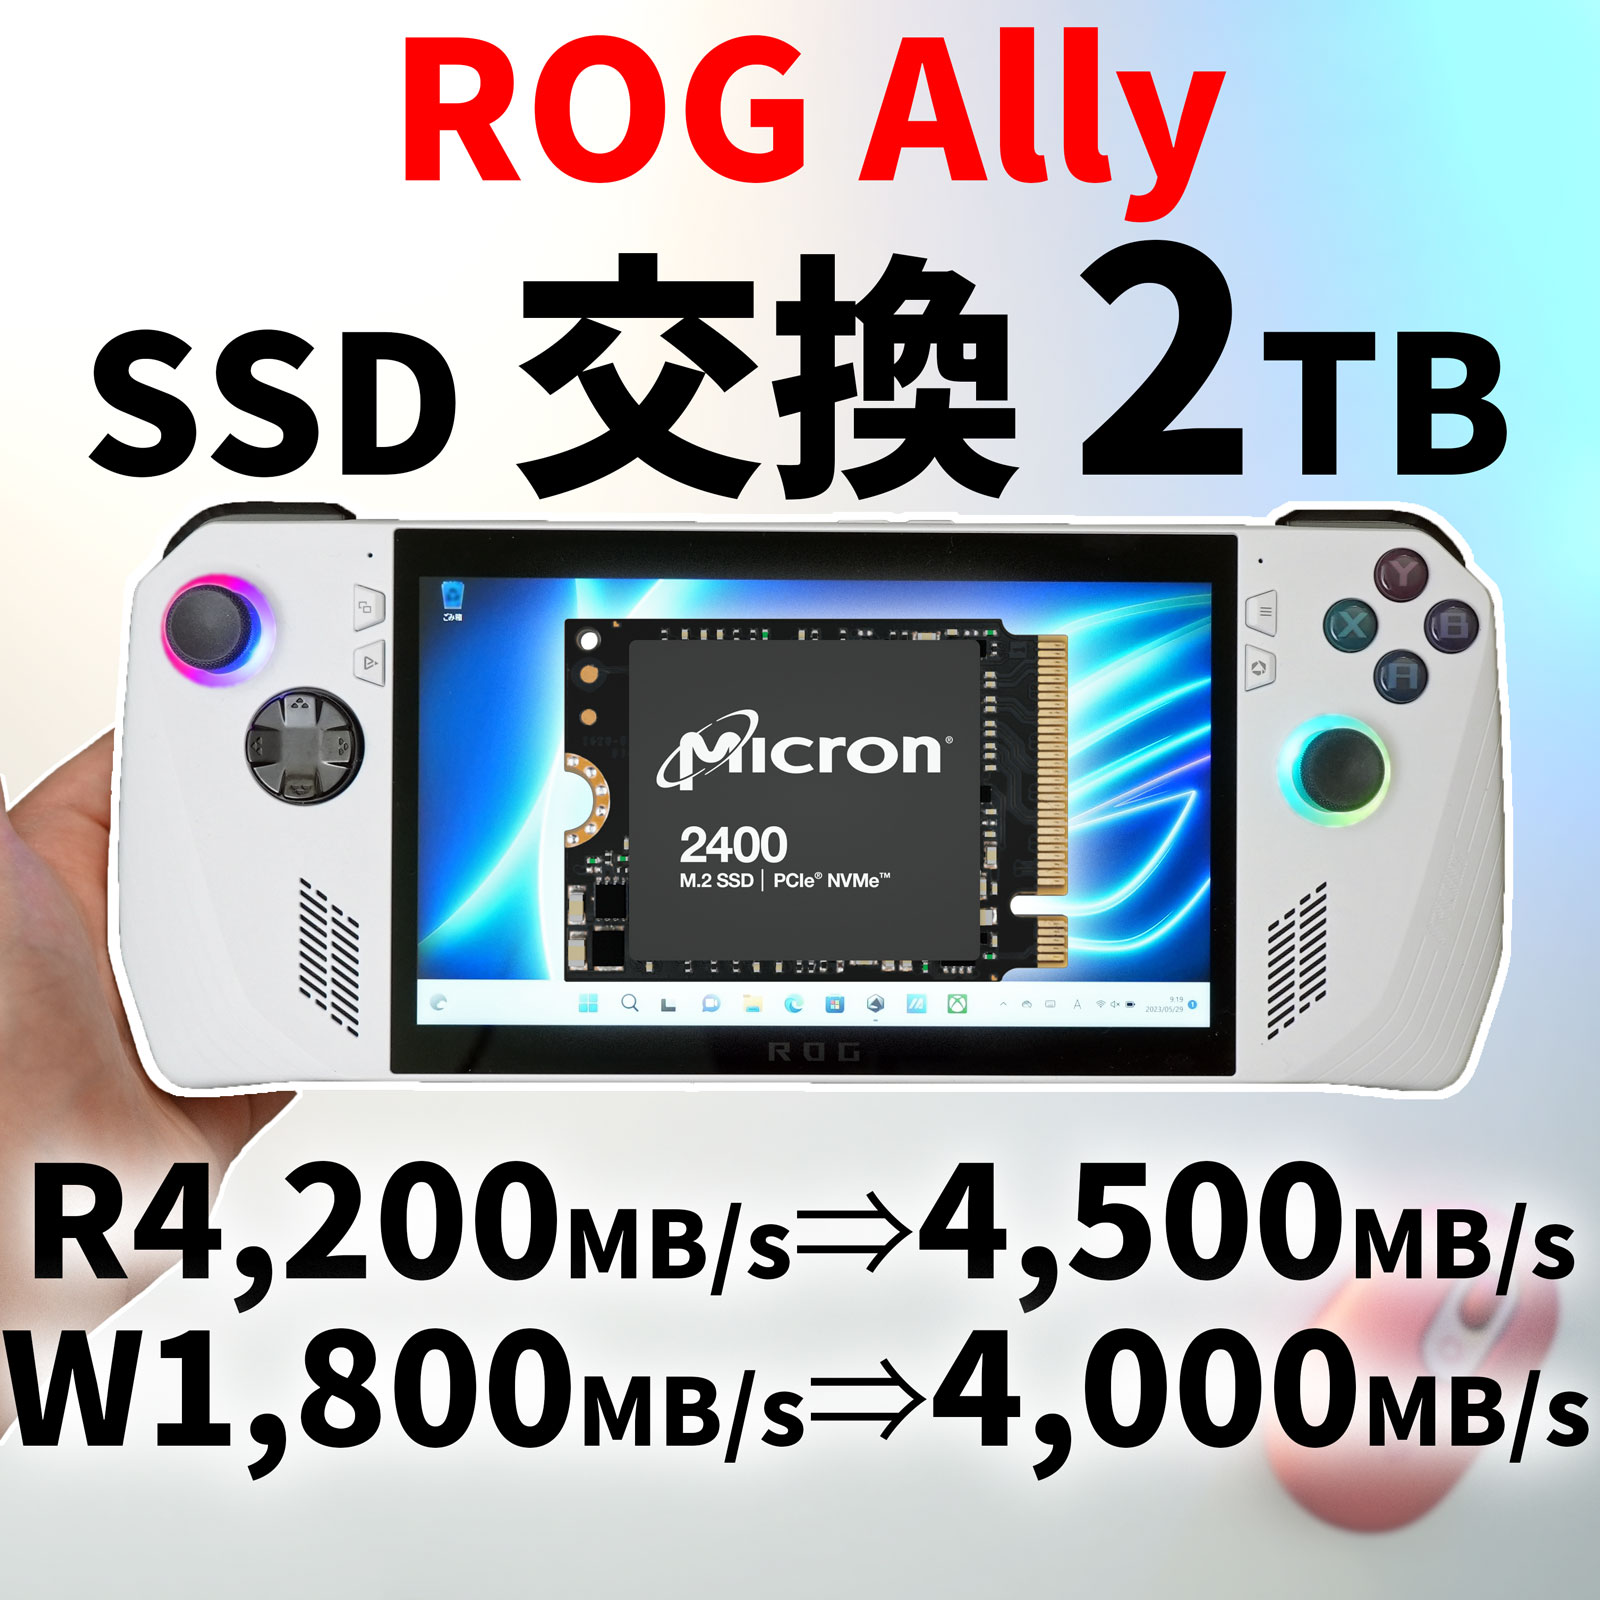 ROG Ally 2TB 増設済み 画面カバー 本体カバー付き